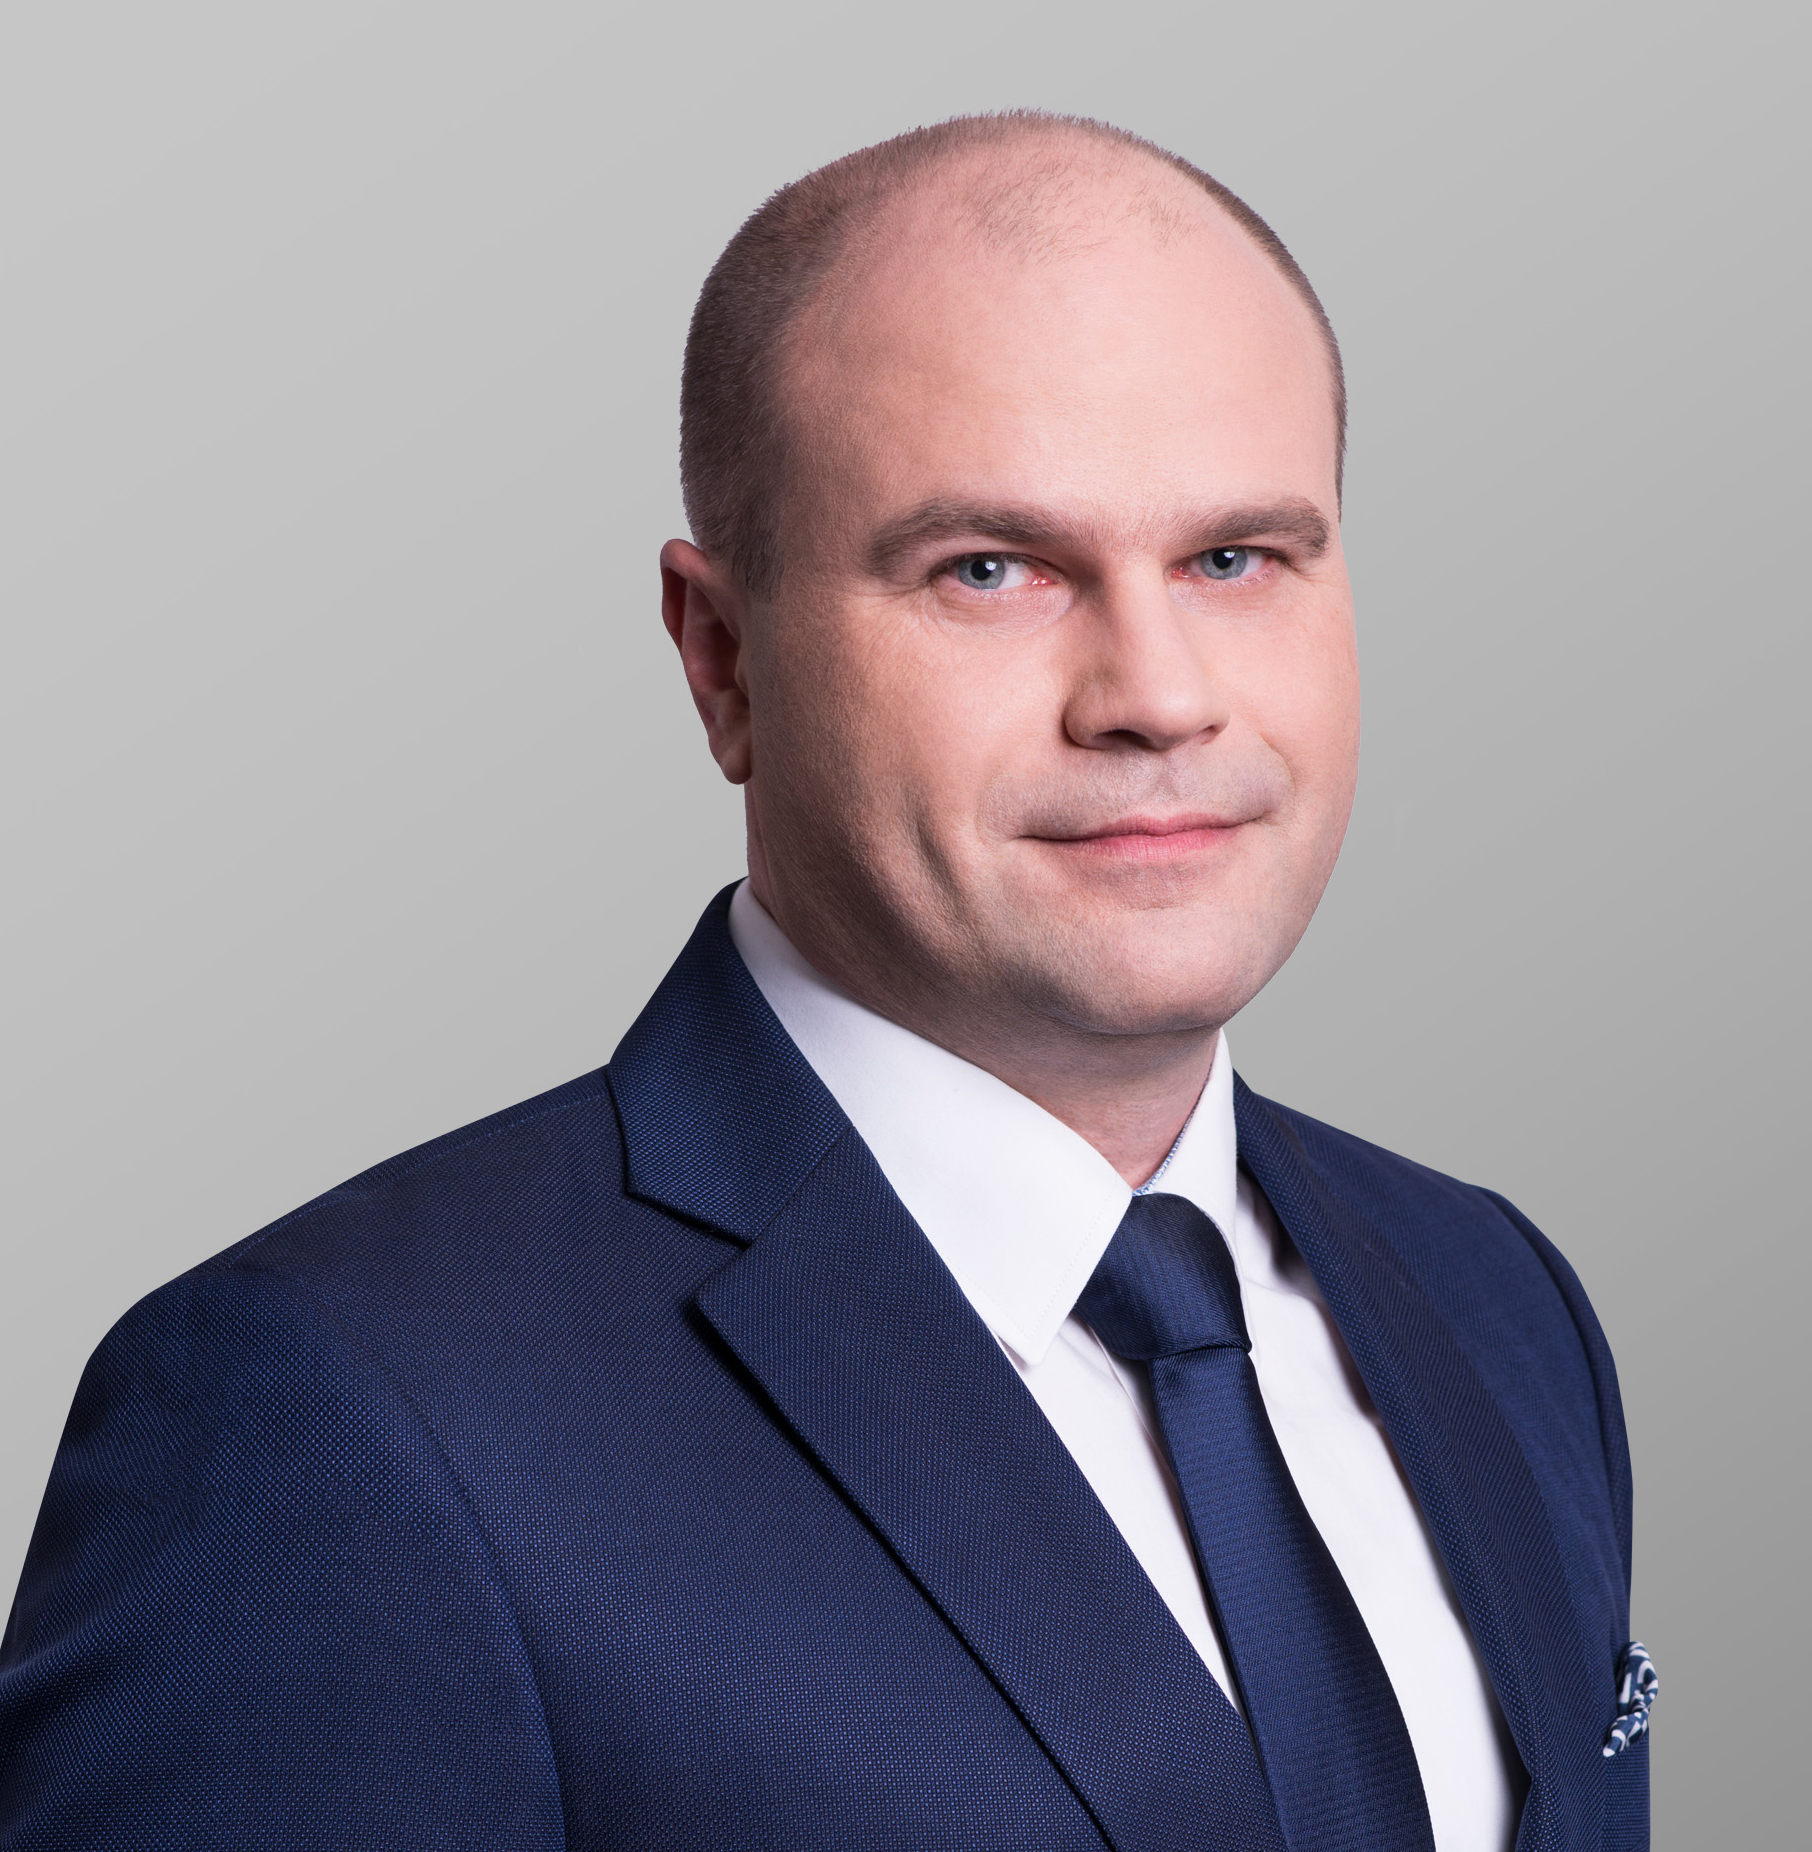 Arkadiusz Wargin - Executive Director - IT Contracting, Hays Poland